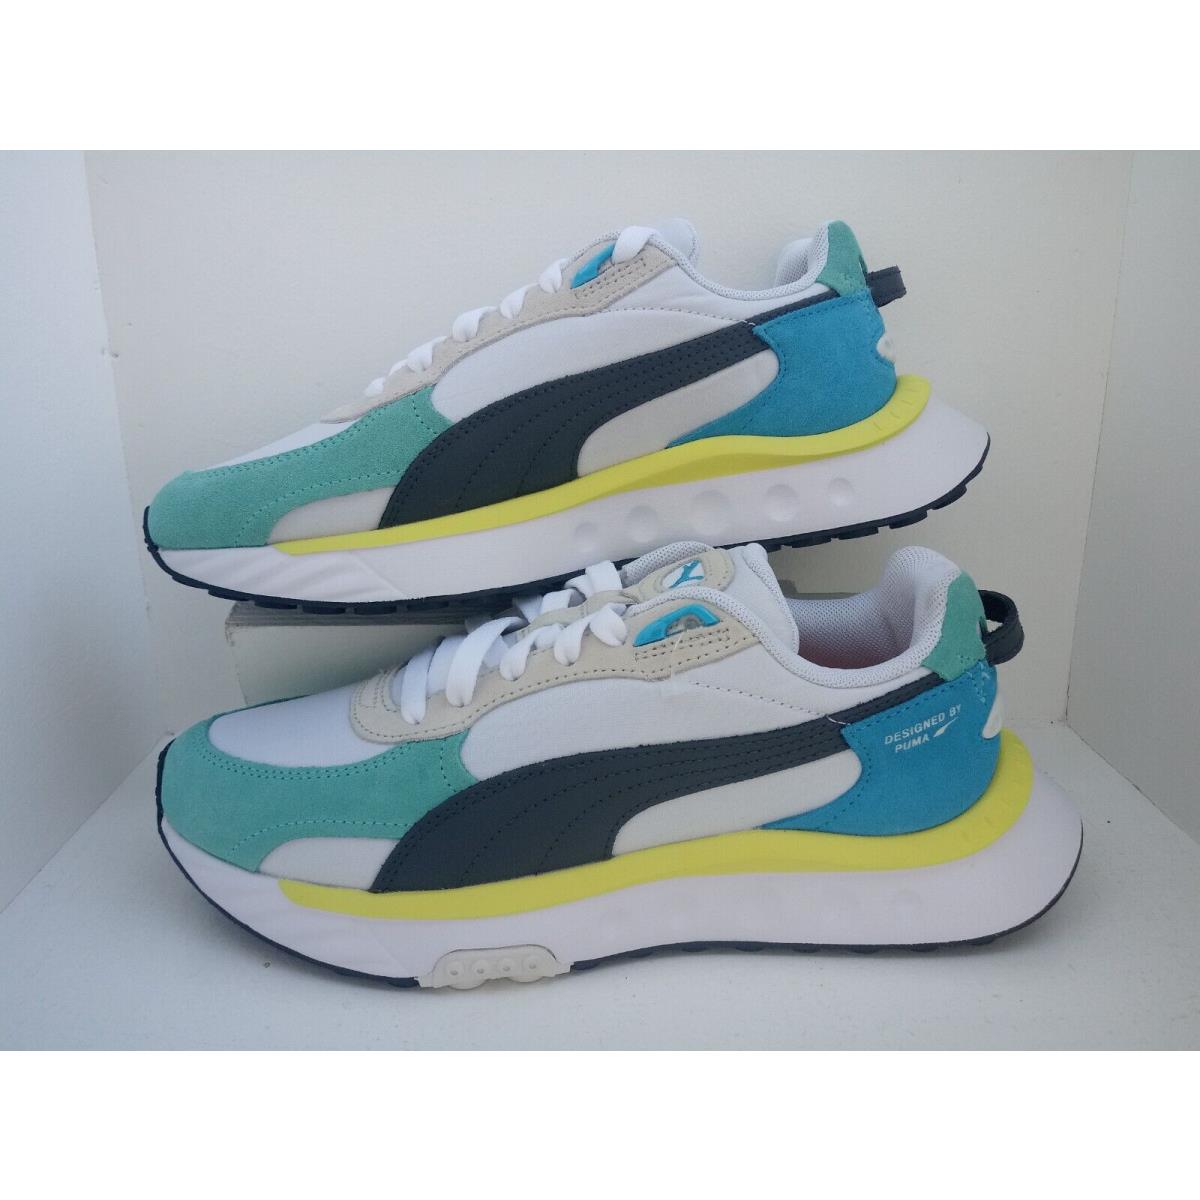 Puma shoes Shoes - Elektro Aqua/Puma White 3